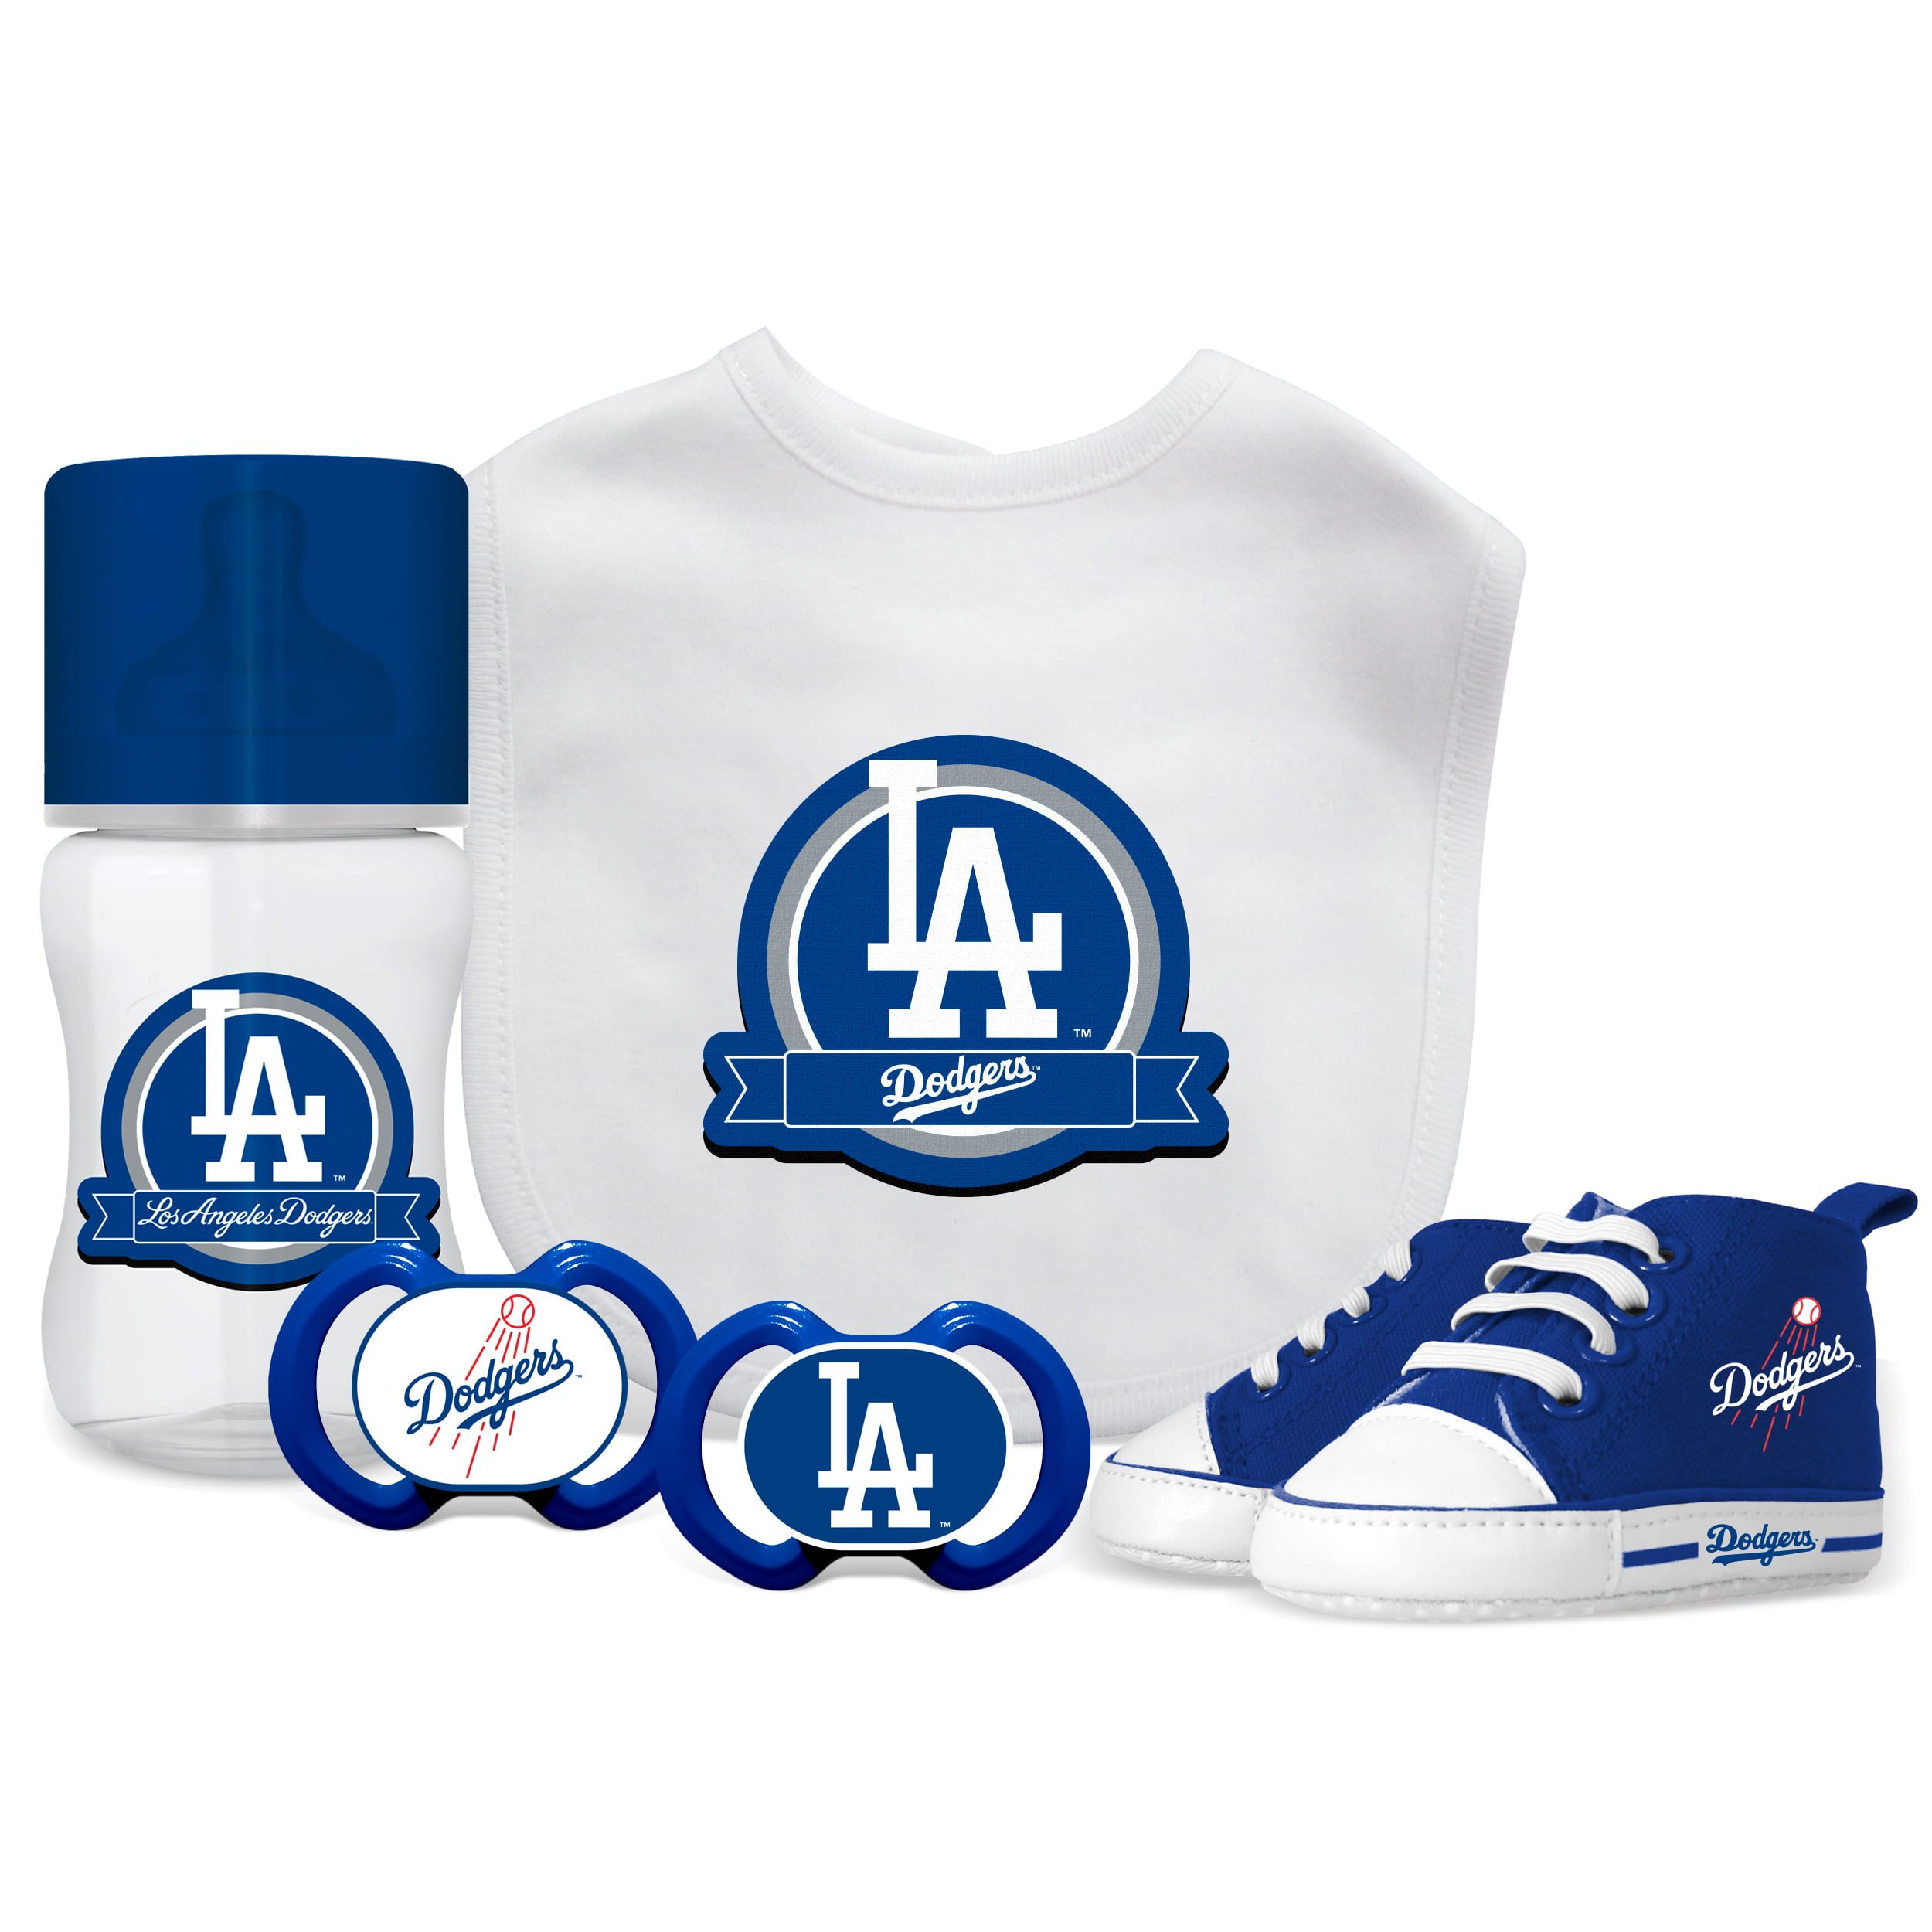 La Dodgers Gifts & Merchandise for Sale